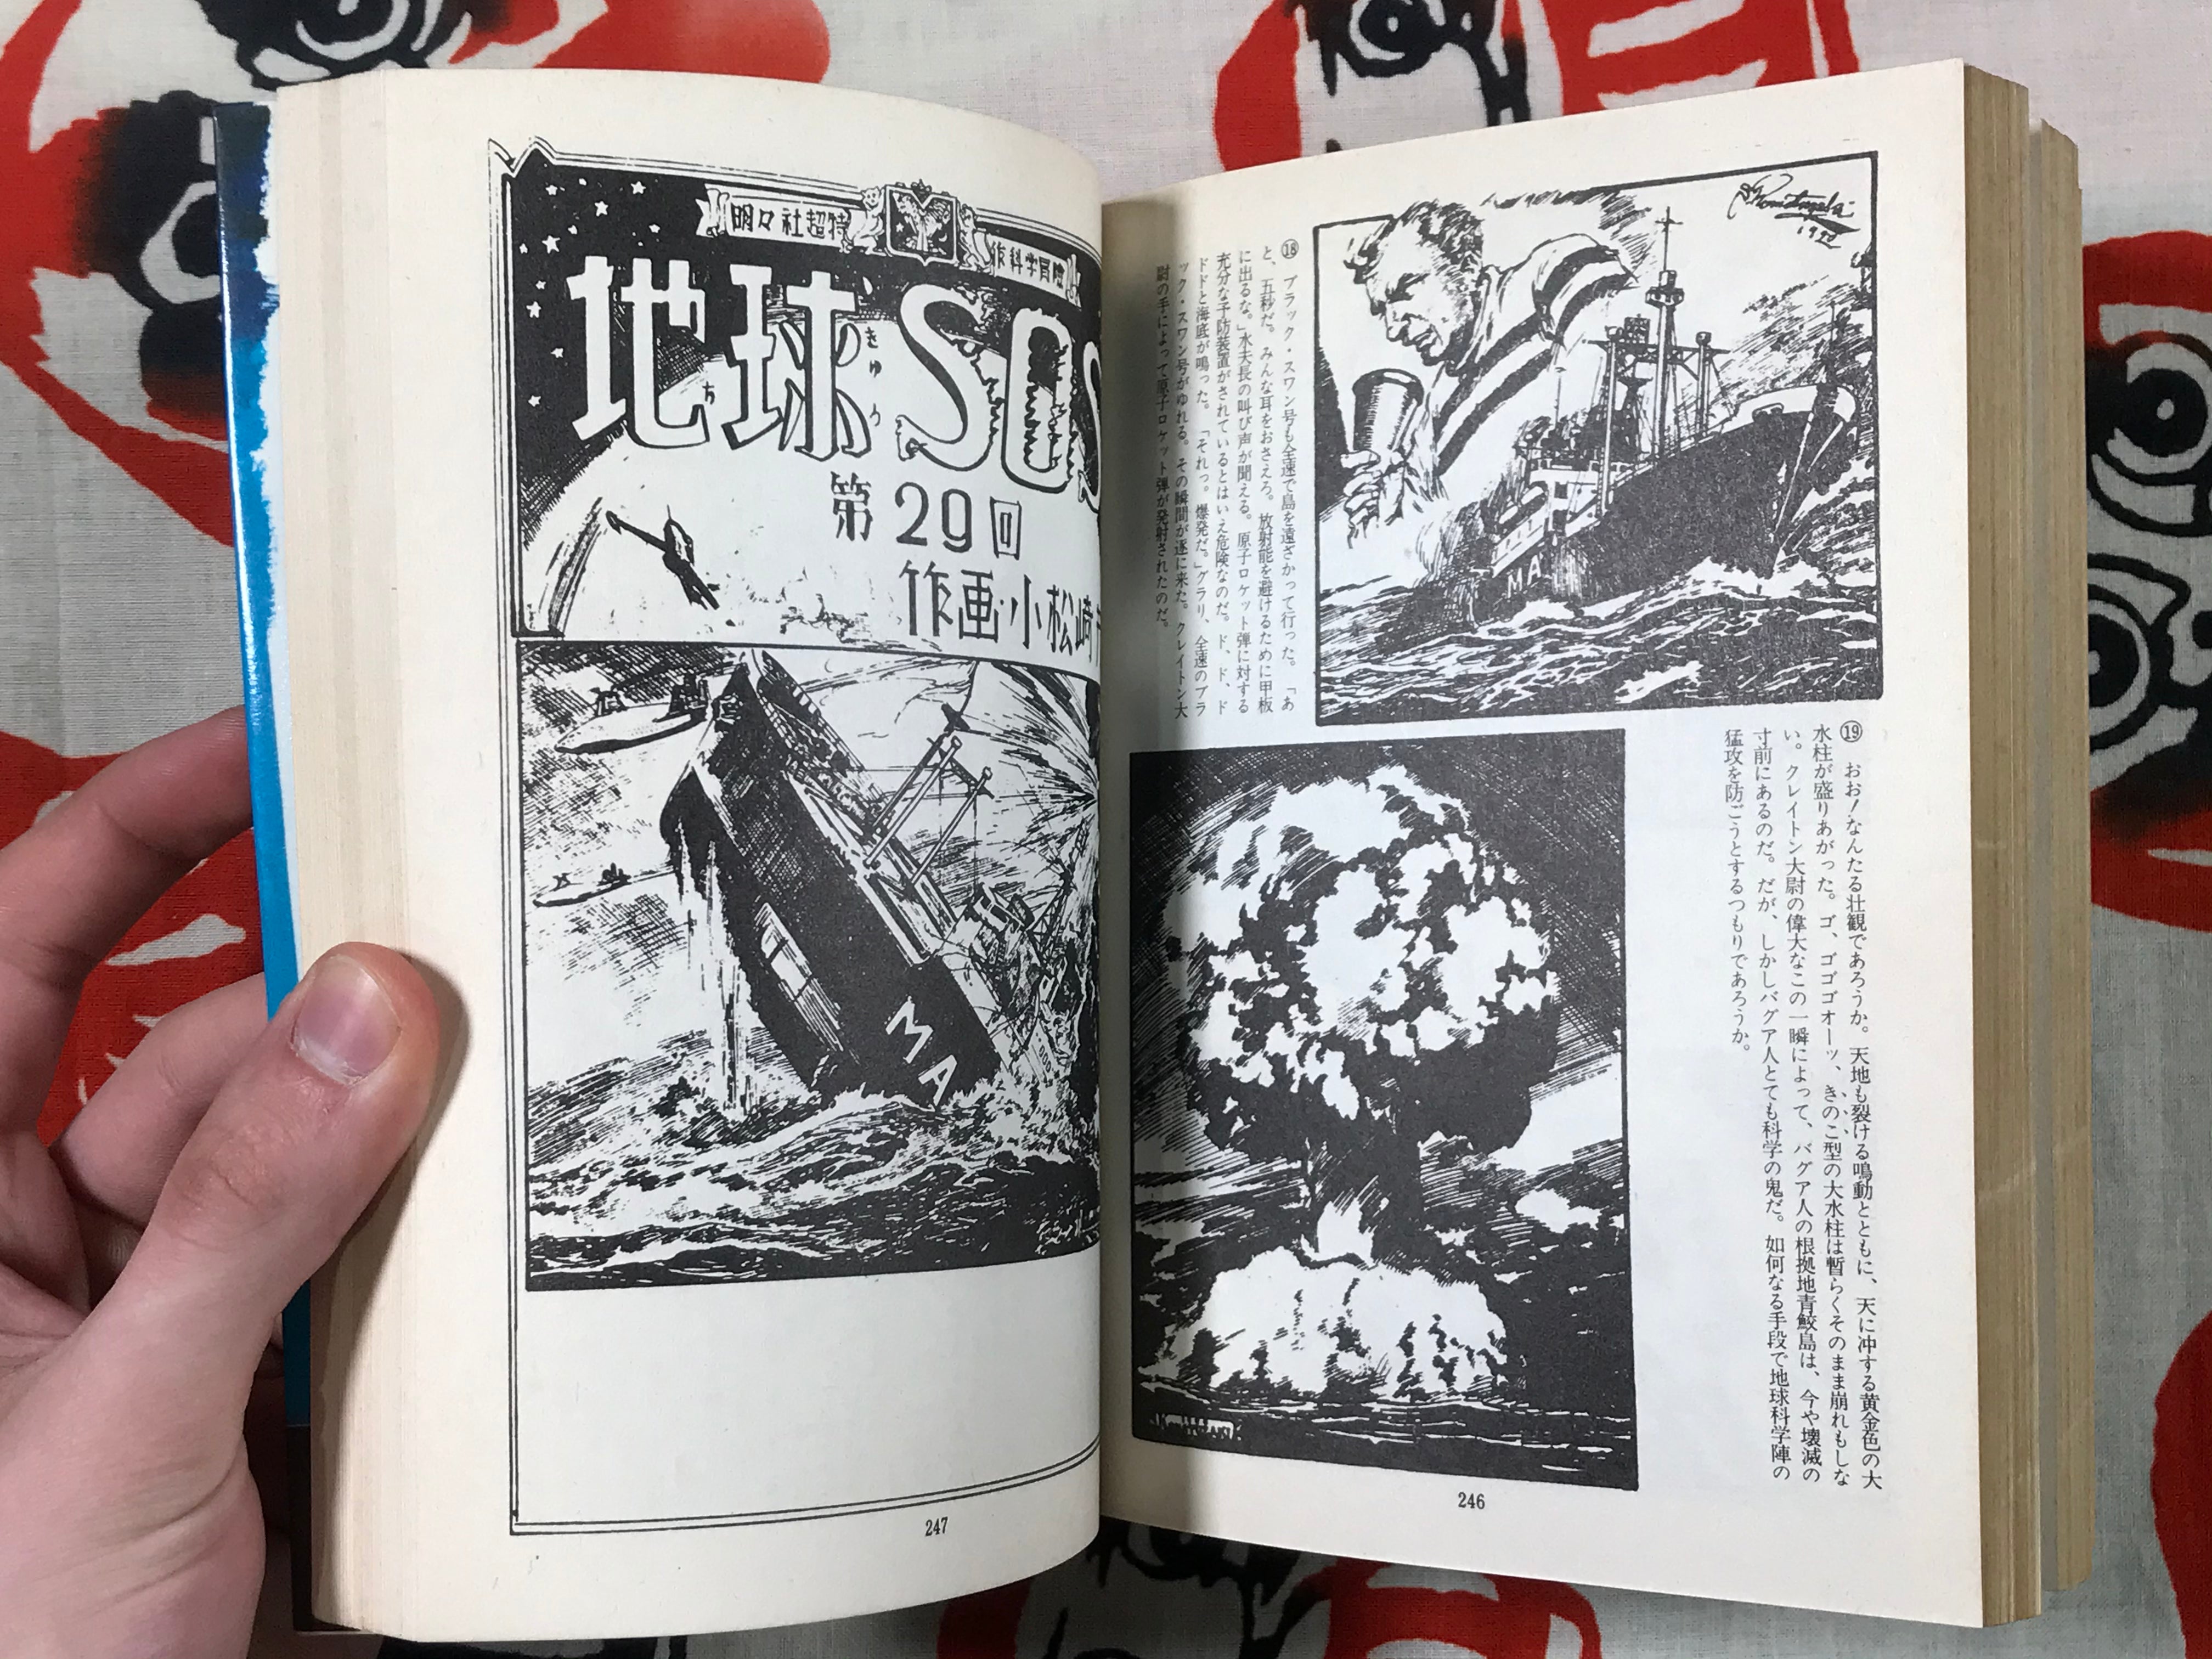 SOS Earth by Shigeru Komatsuzaki (1975)